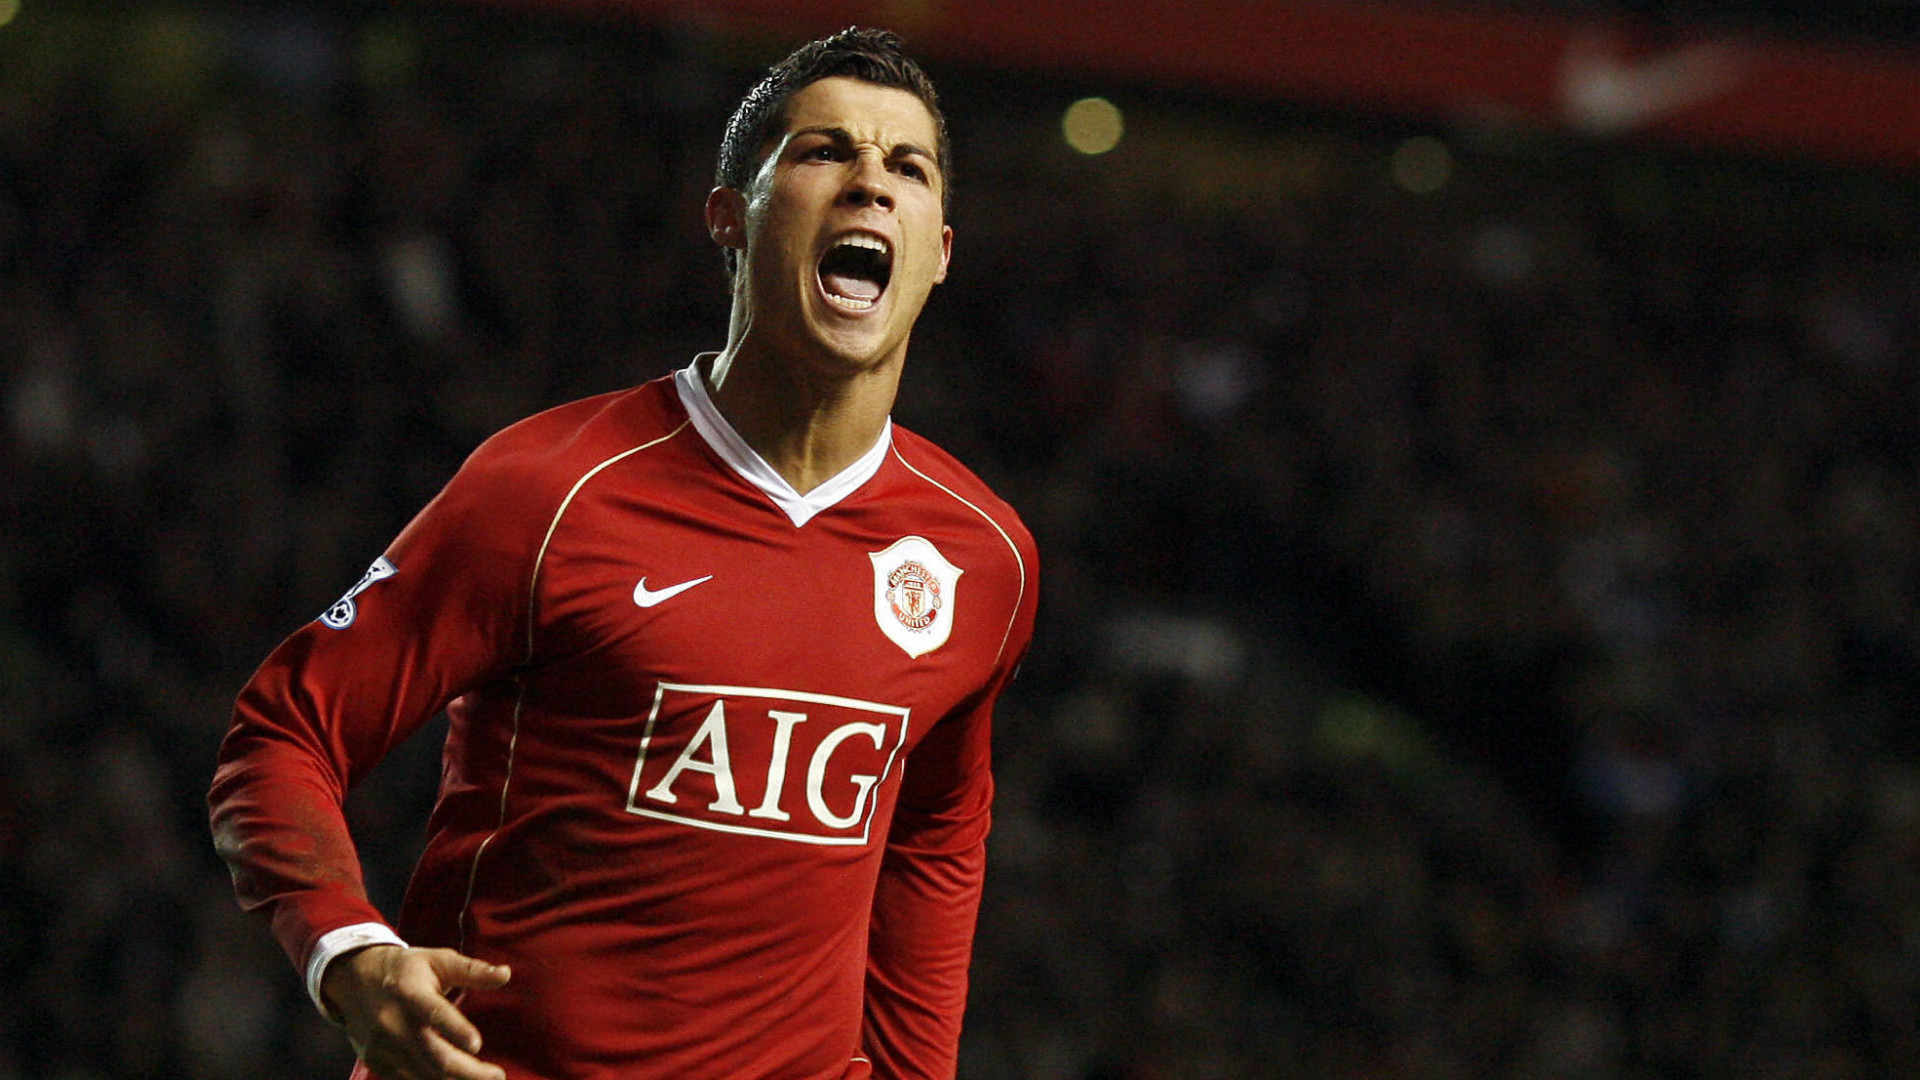 Ronaldo In Manchester United / Cristiano Ronaldo: Star forward nearly